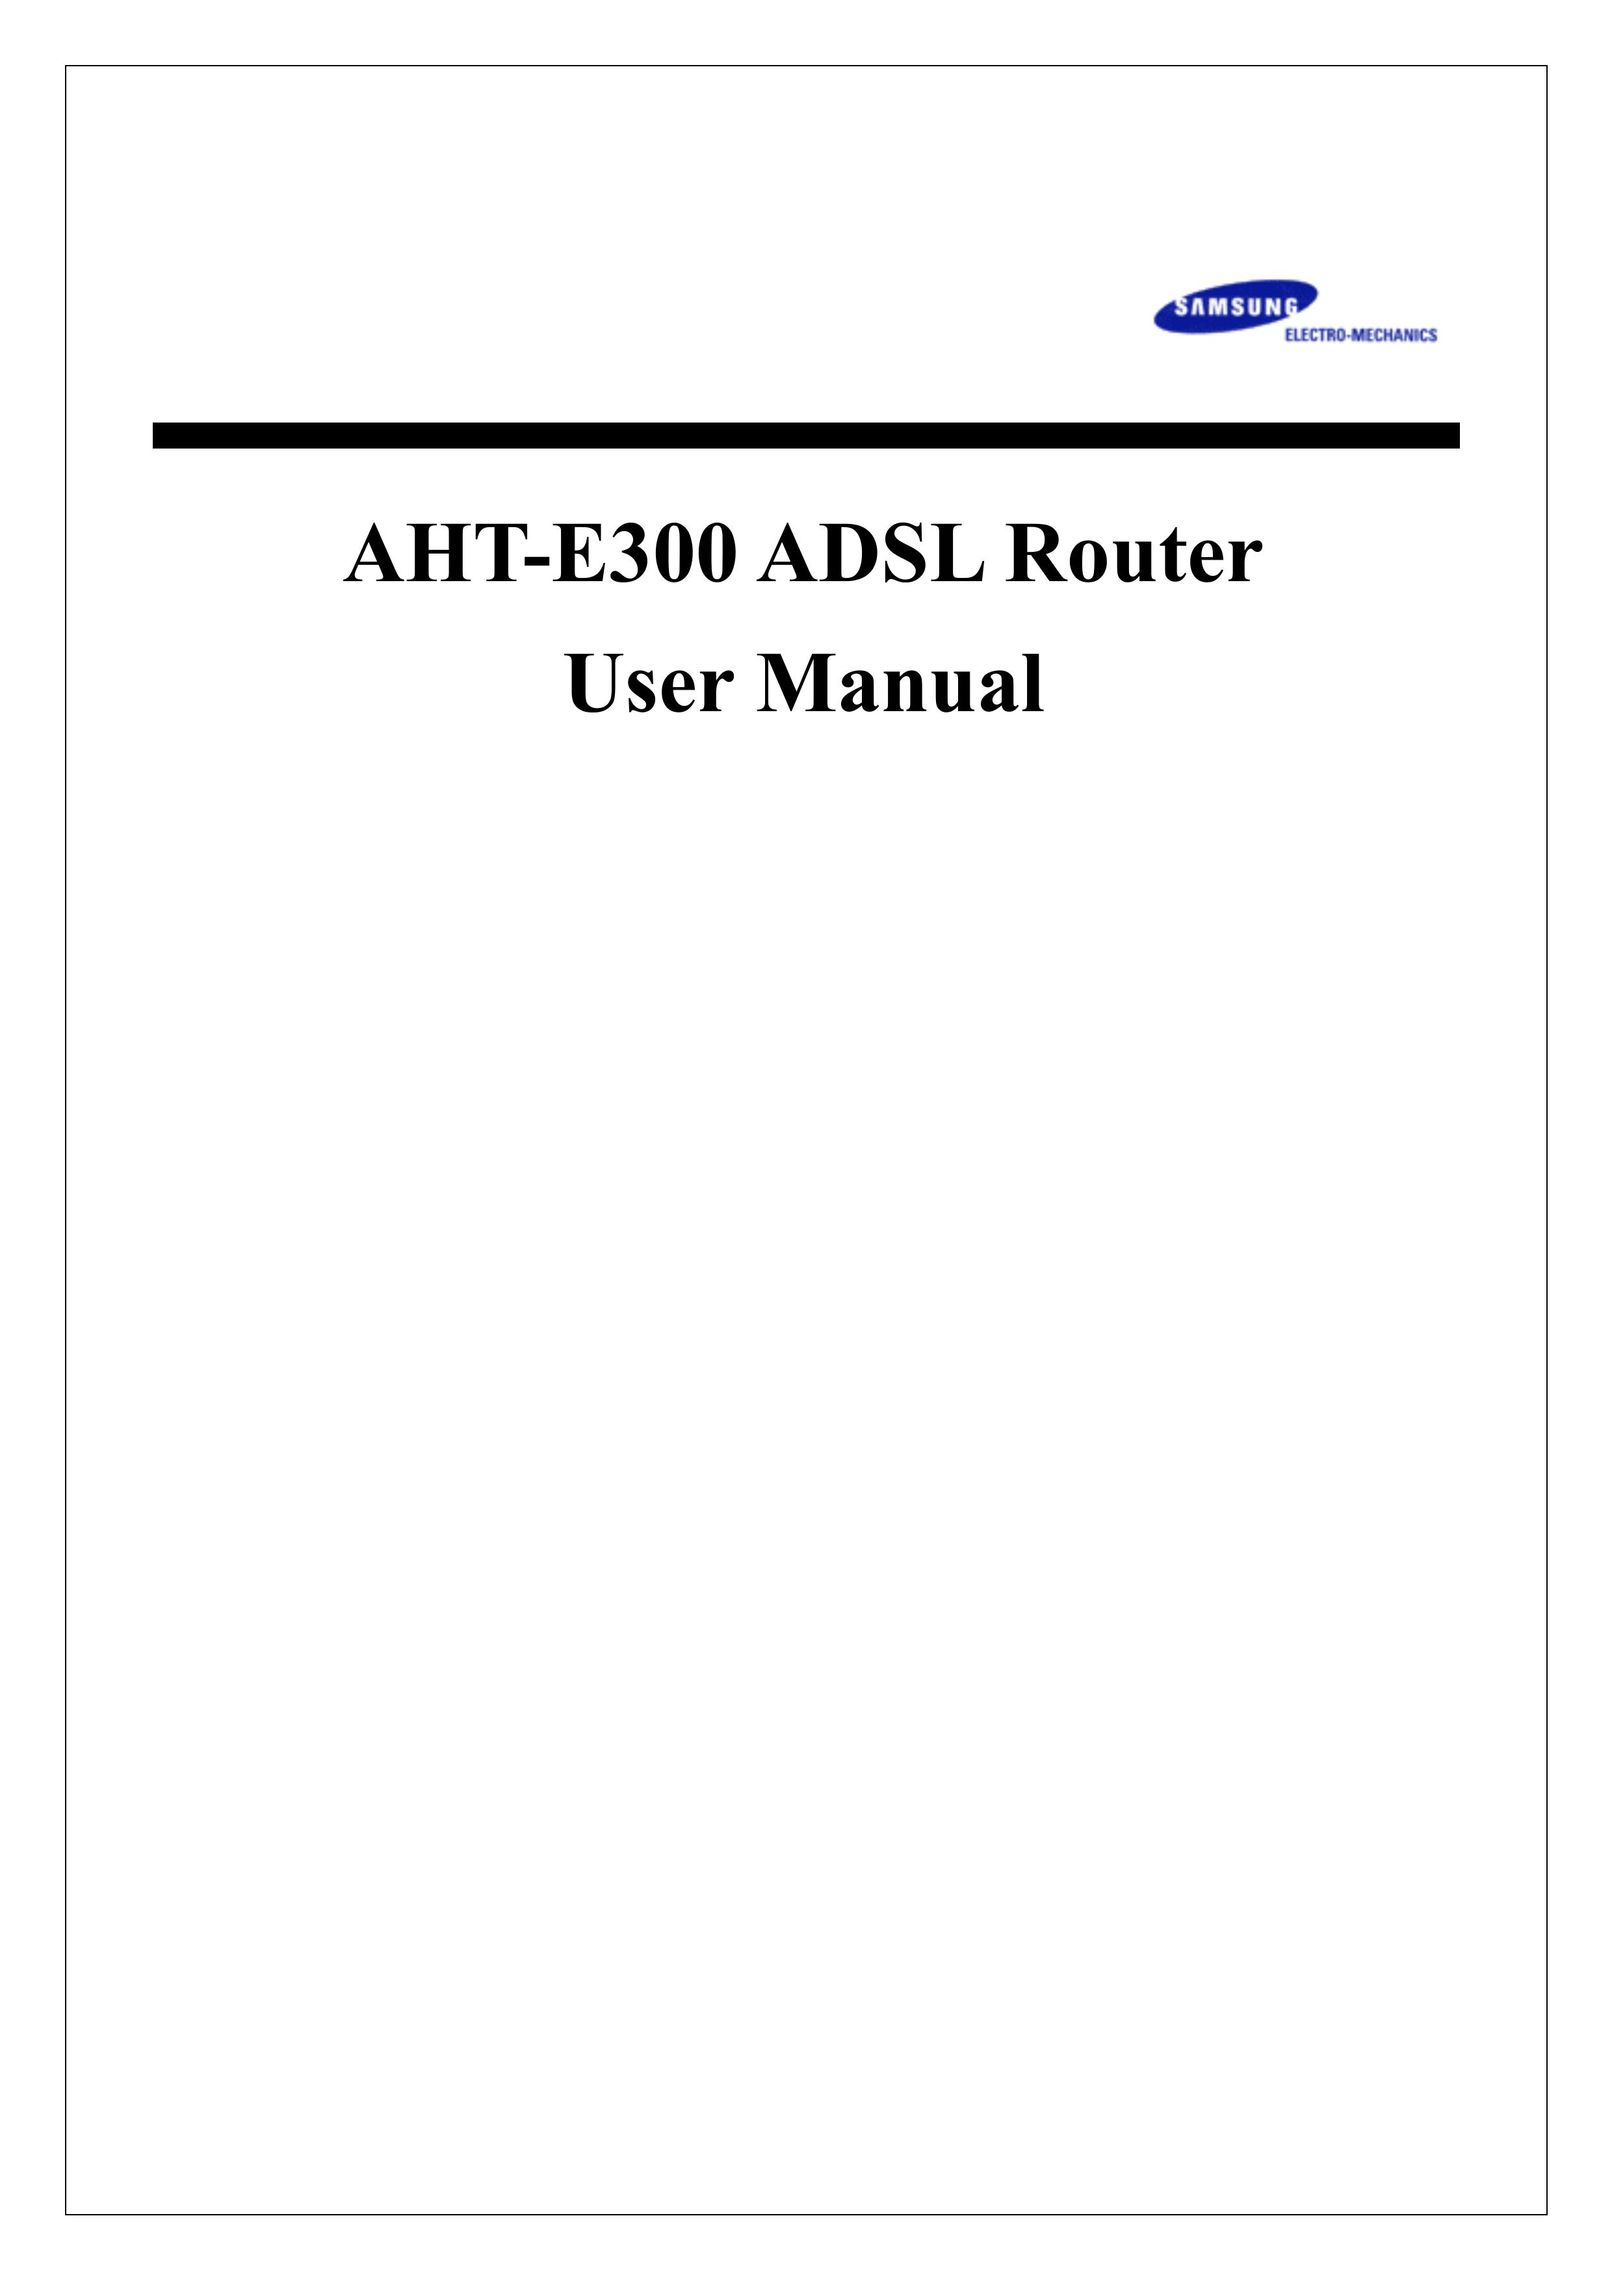 Sharp AHT-E300 Network Router User Manual